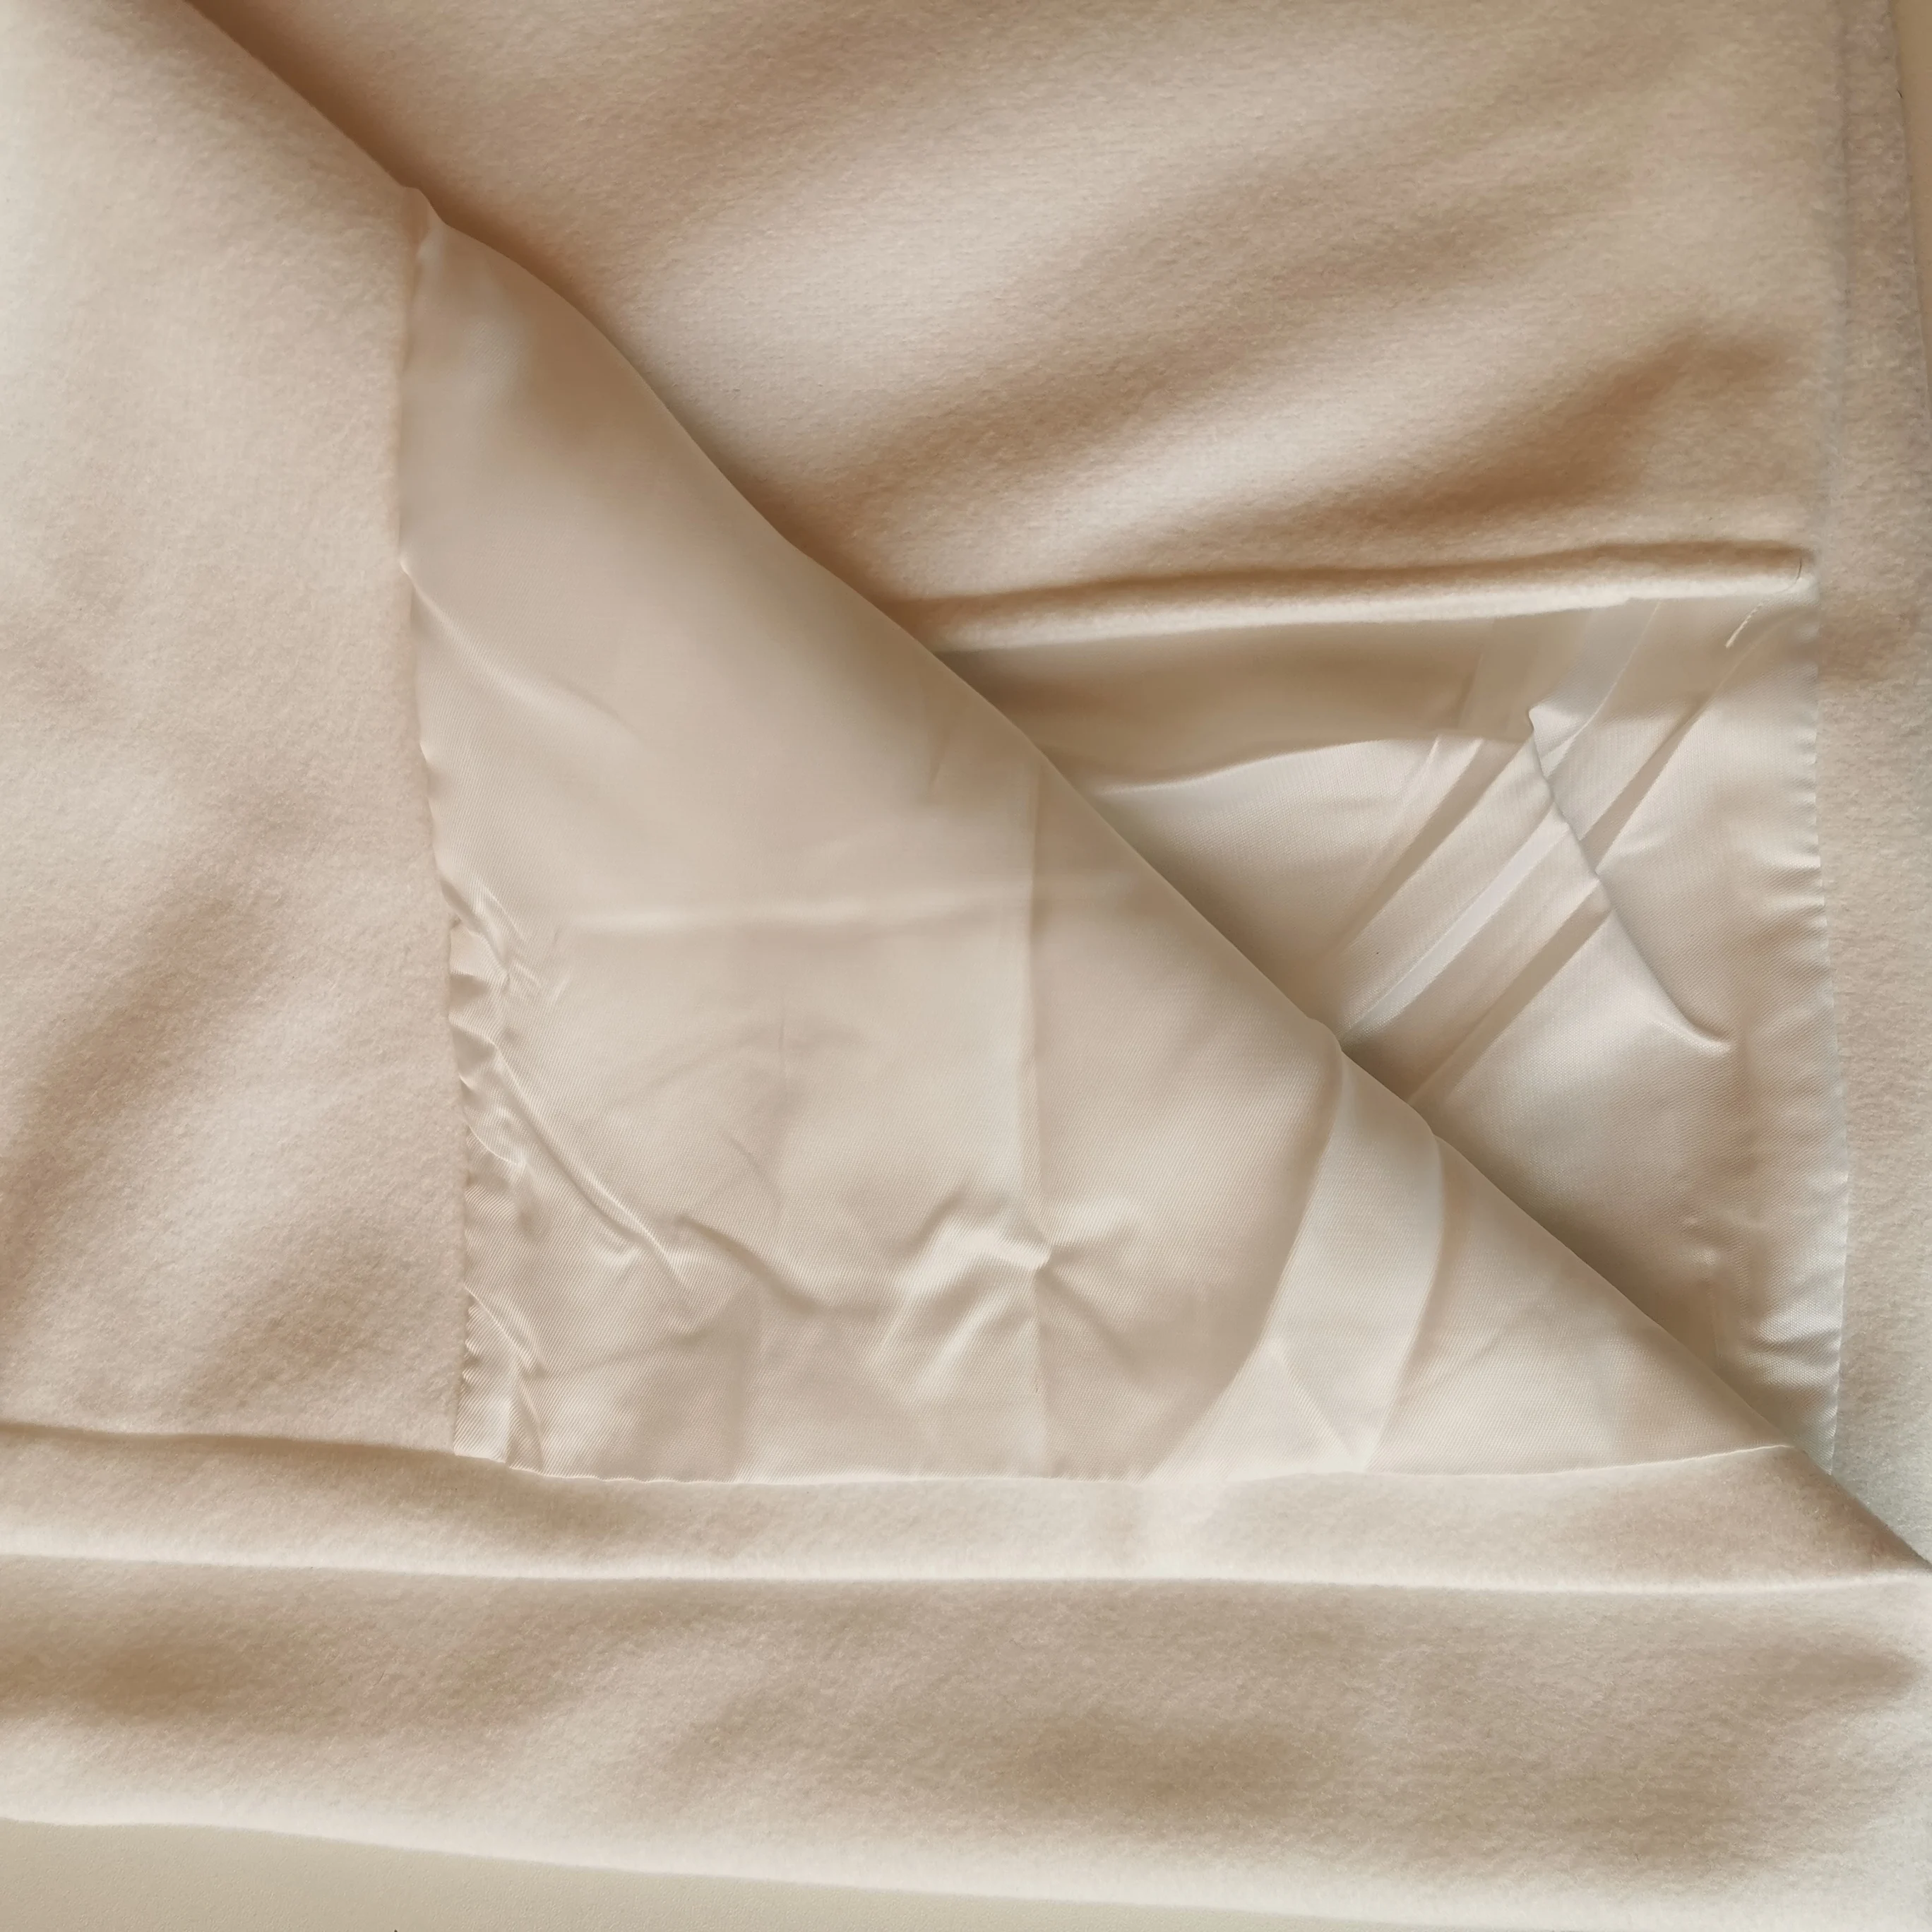 

White Mens Long Jackets 2020 Autumn Wool Coats Long Sleeve Button Fashion lapel retro Men Clthing Blends Causal Winter Outerwear